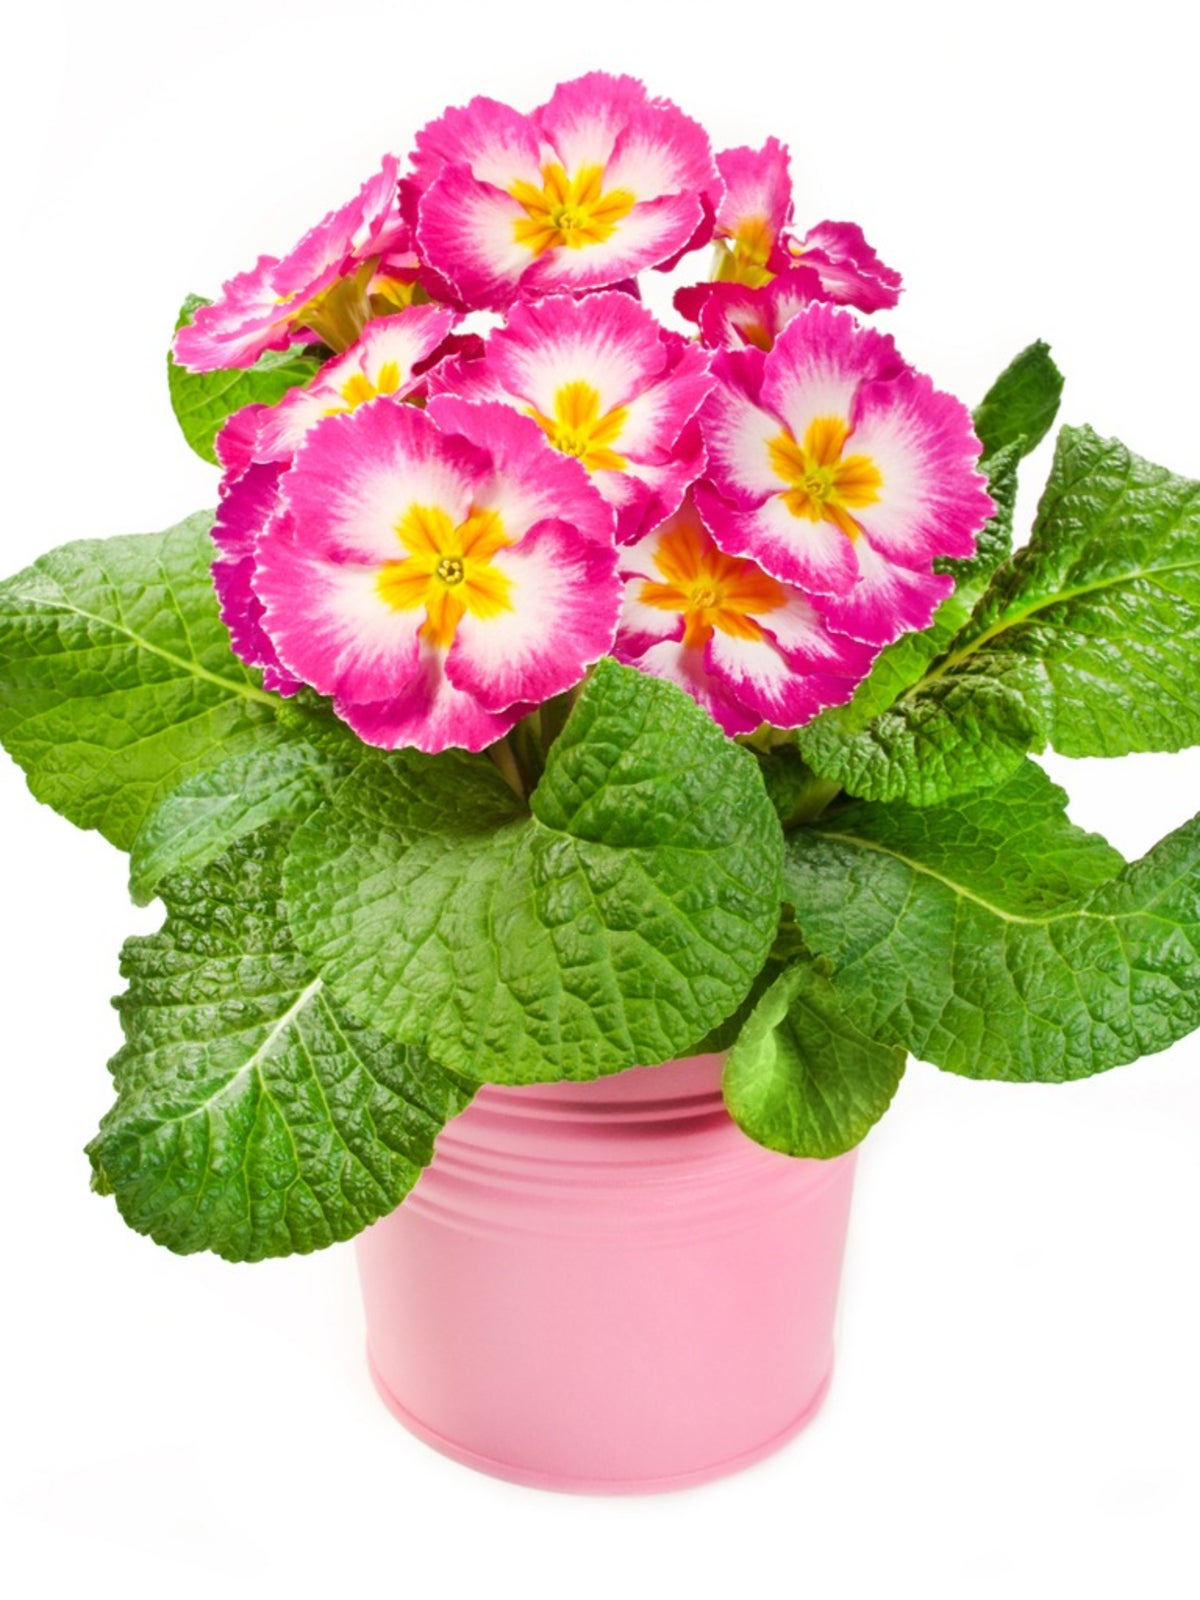 the primrose houseplant - how to grow primrose indoors